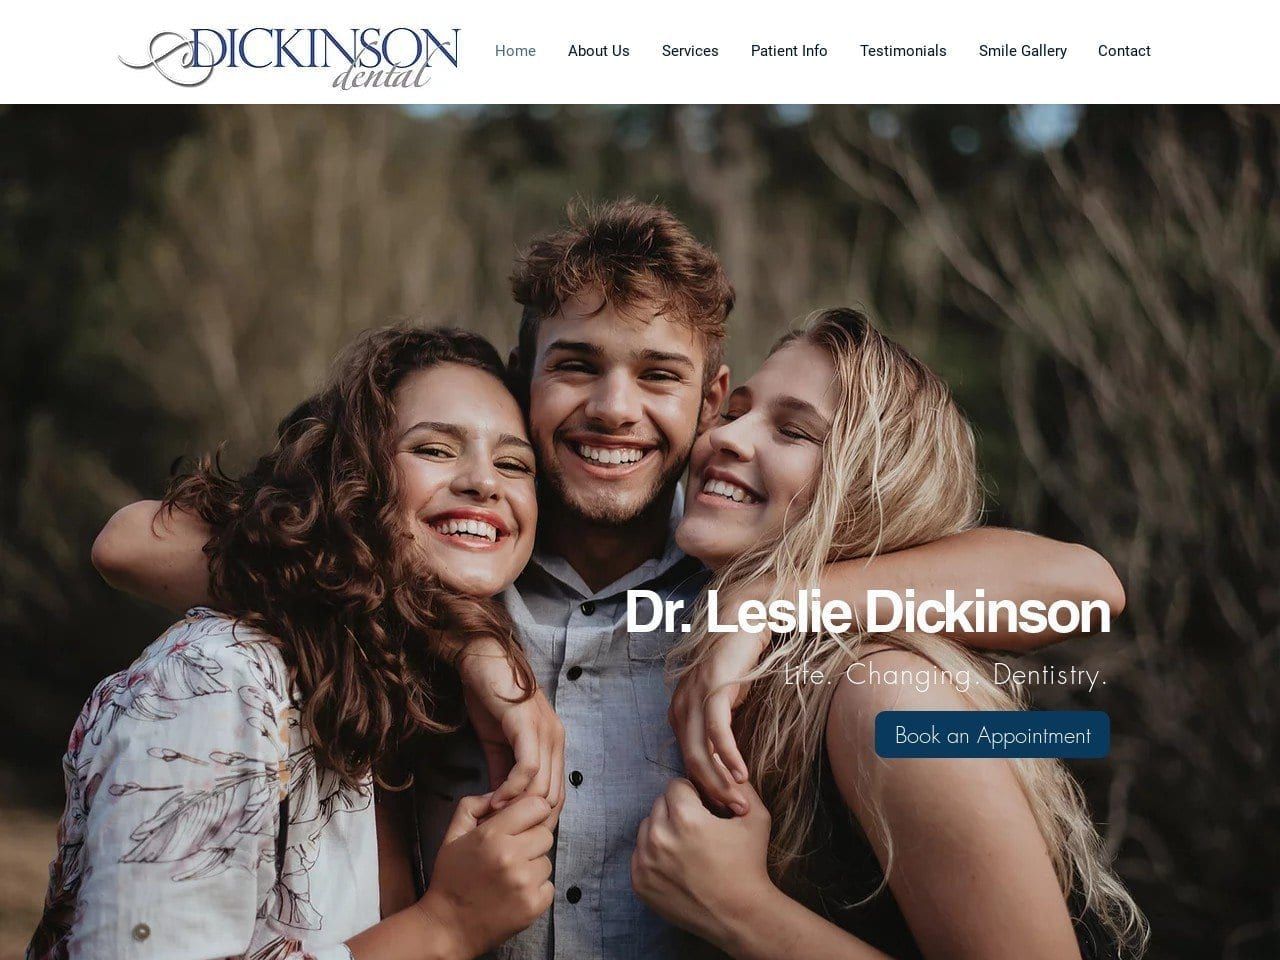 Dickinson Dental Website Screenshot from drlesliedickinson.com